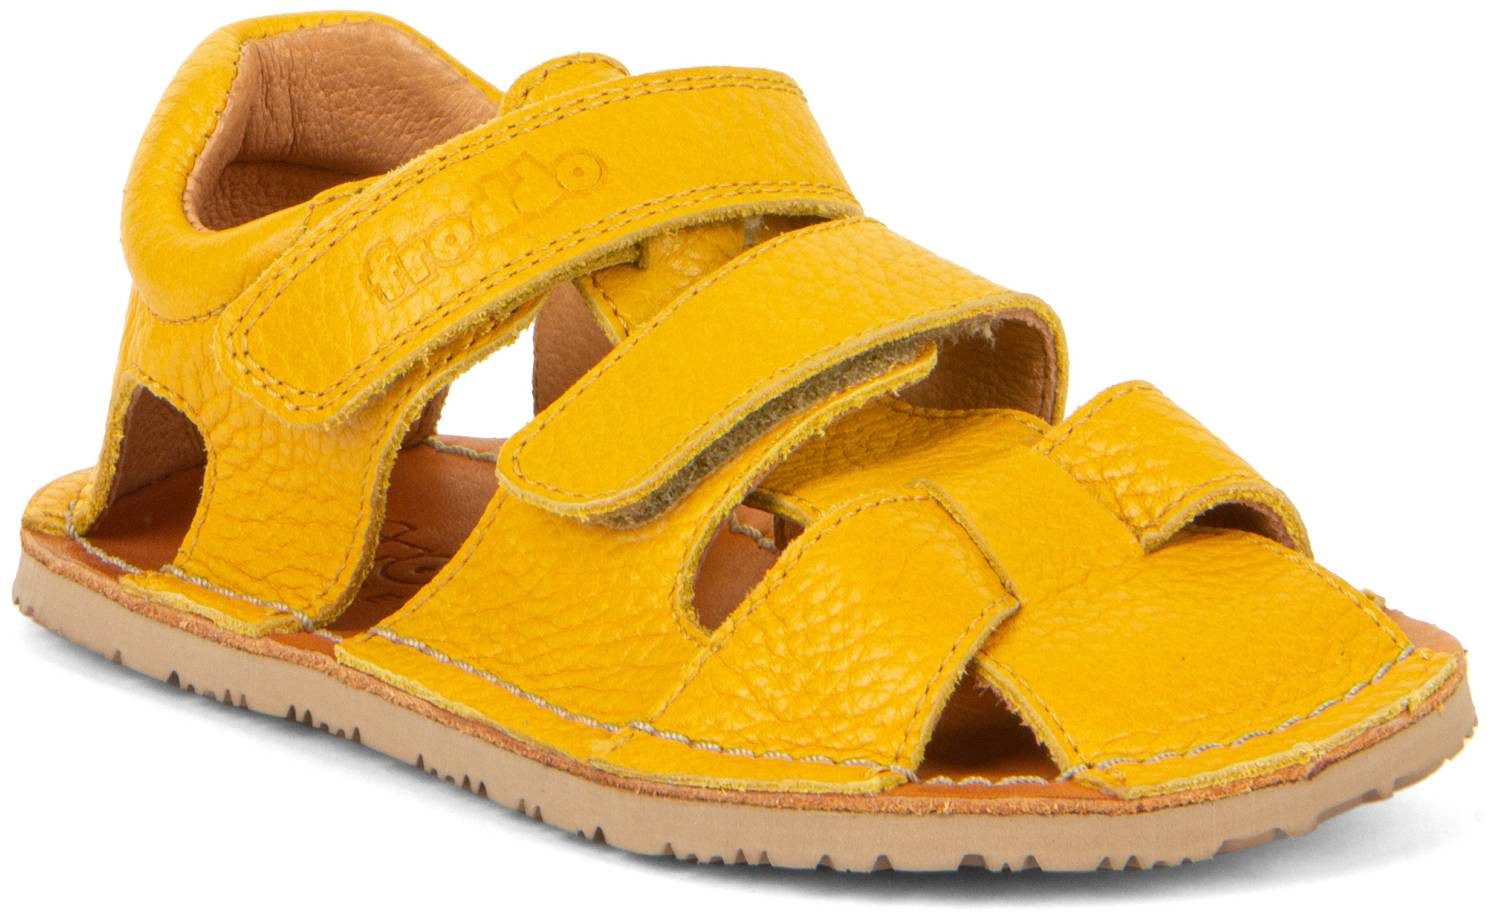 froddo® Froddo Flexy Yellow Sandale